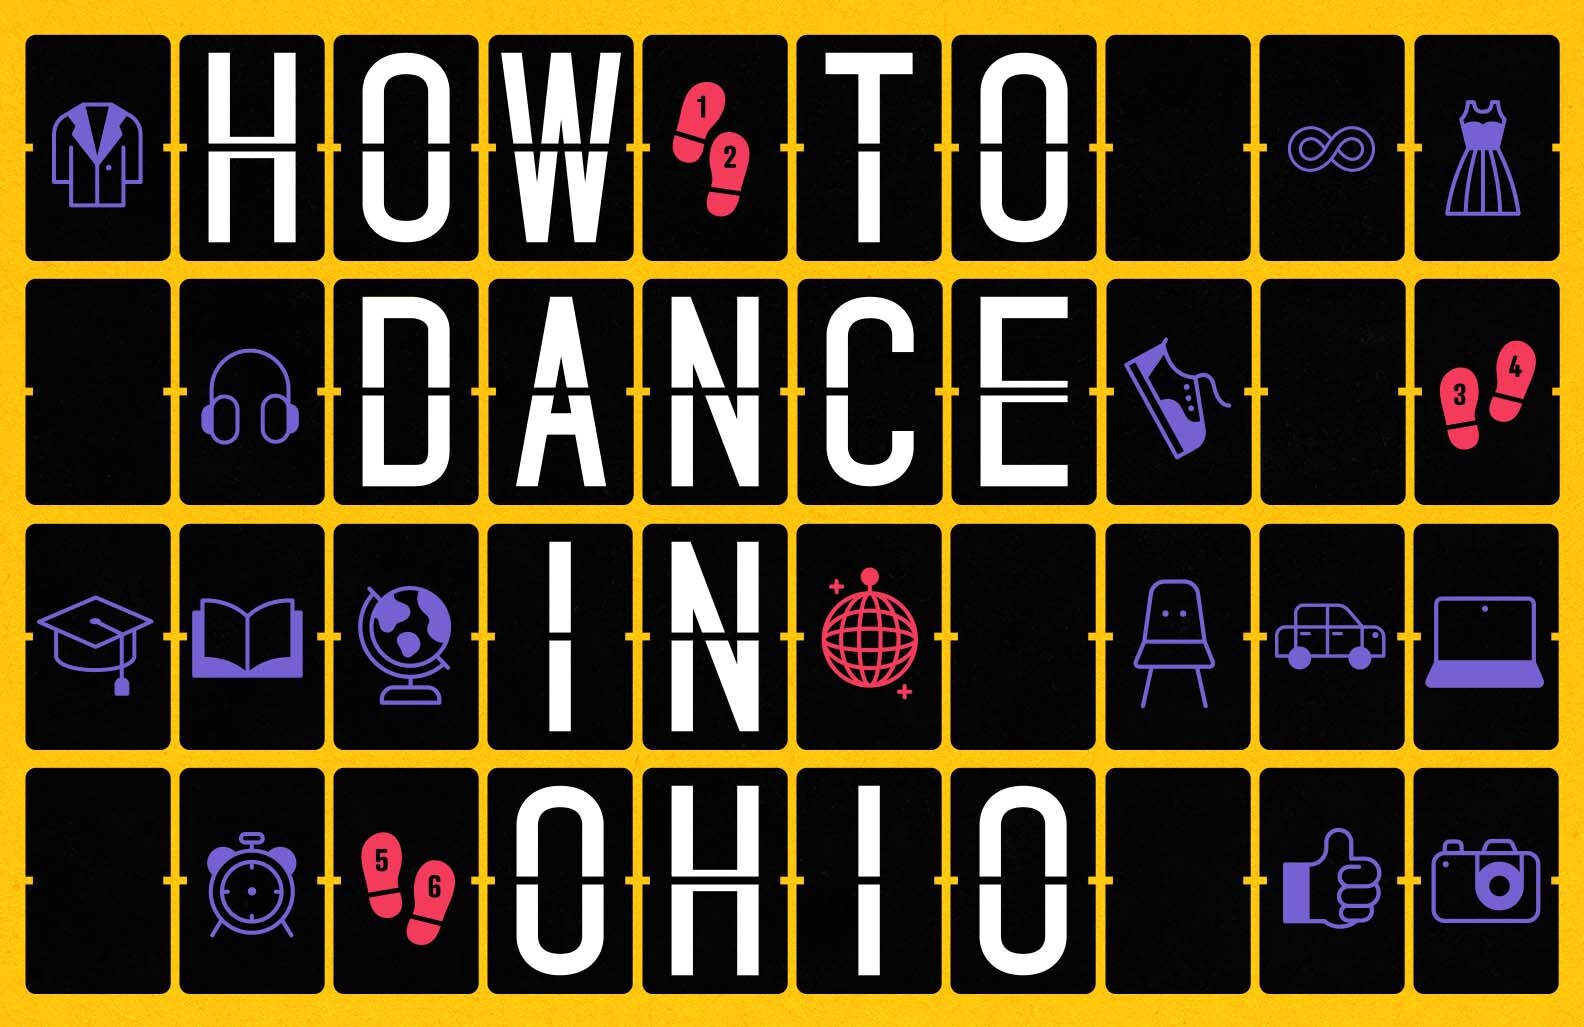 How to Dance in Ohio logo